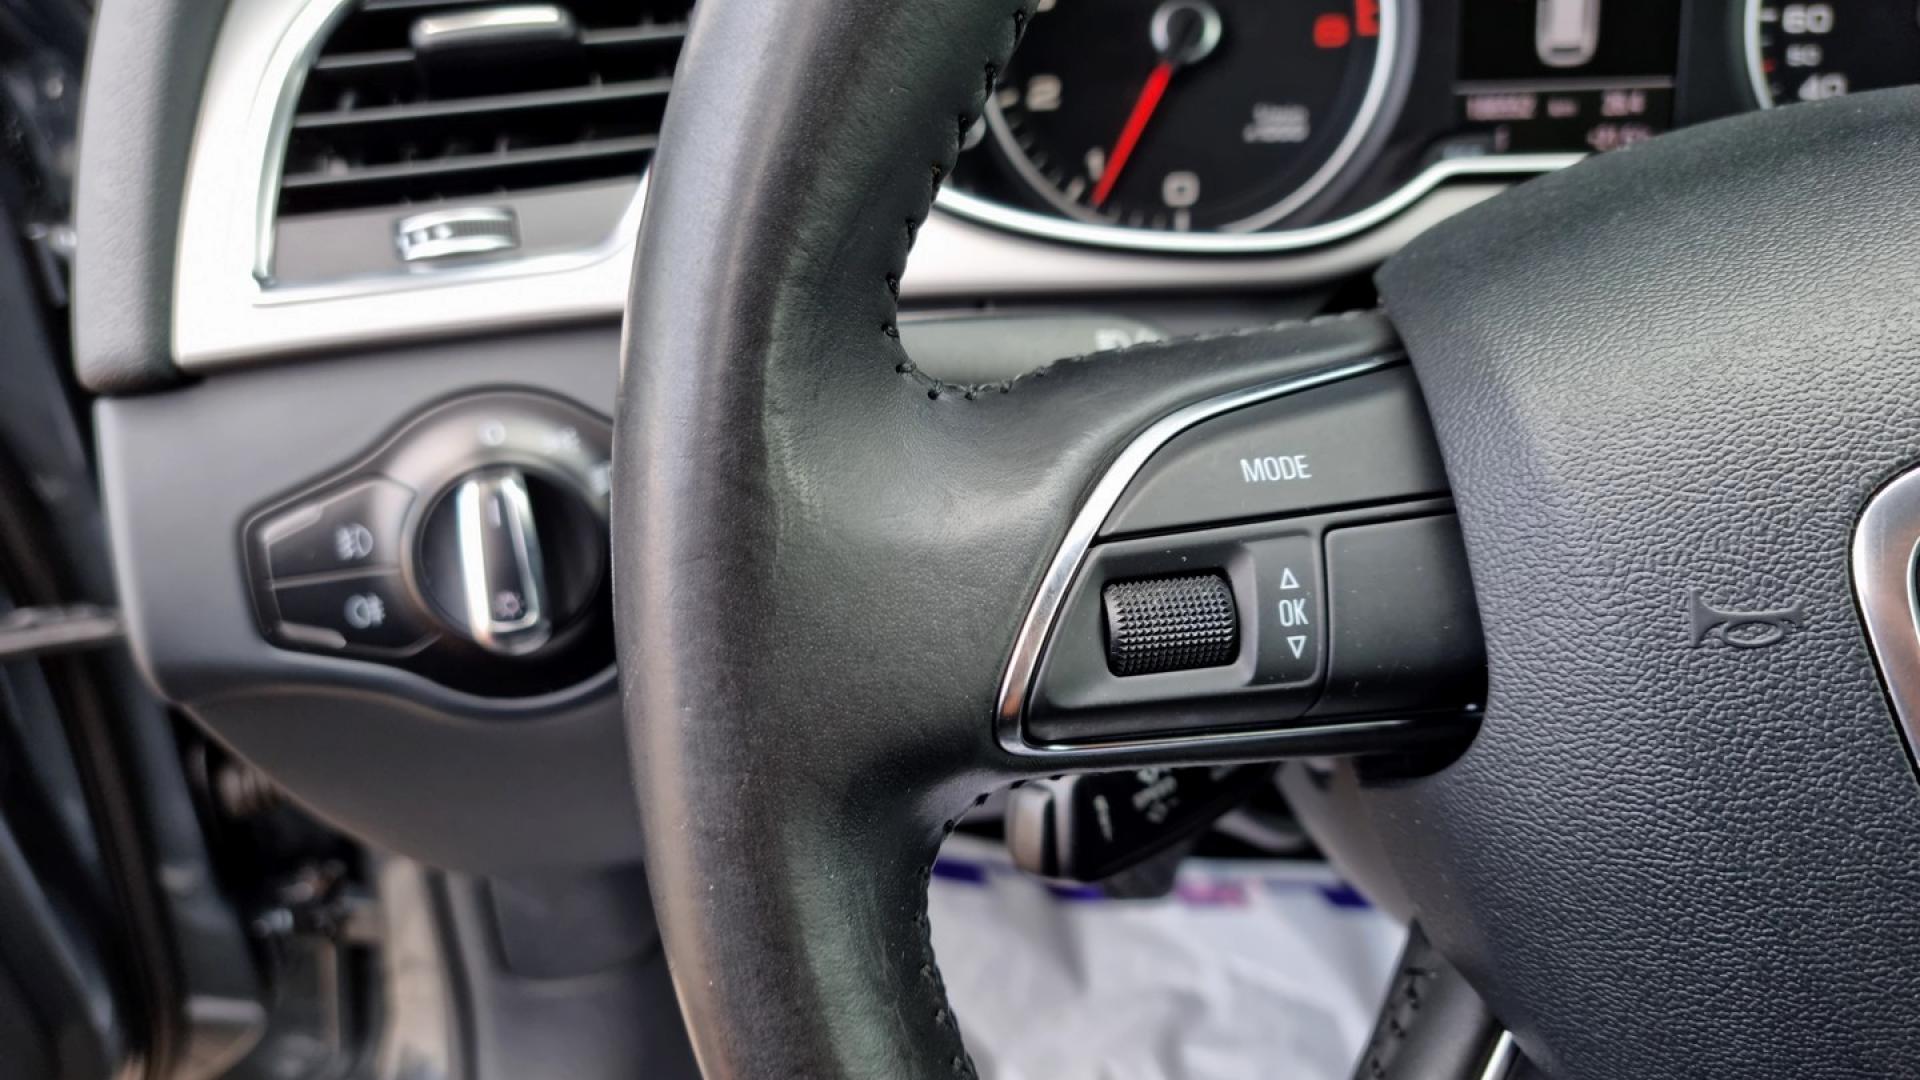 Audi A4 Avant Attraction Nawigacja Grzane fotele Tempomat